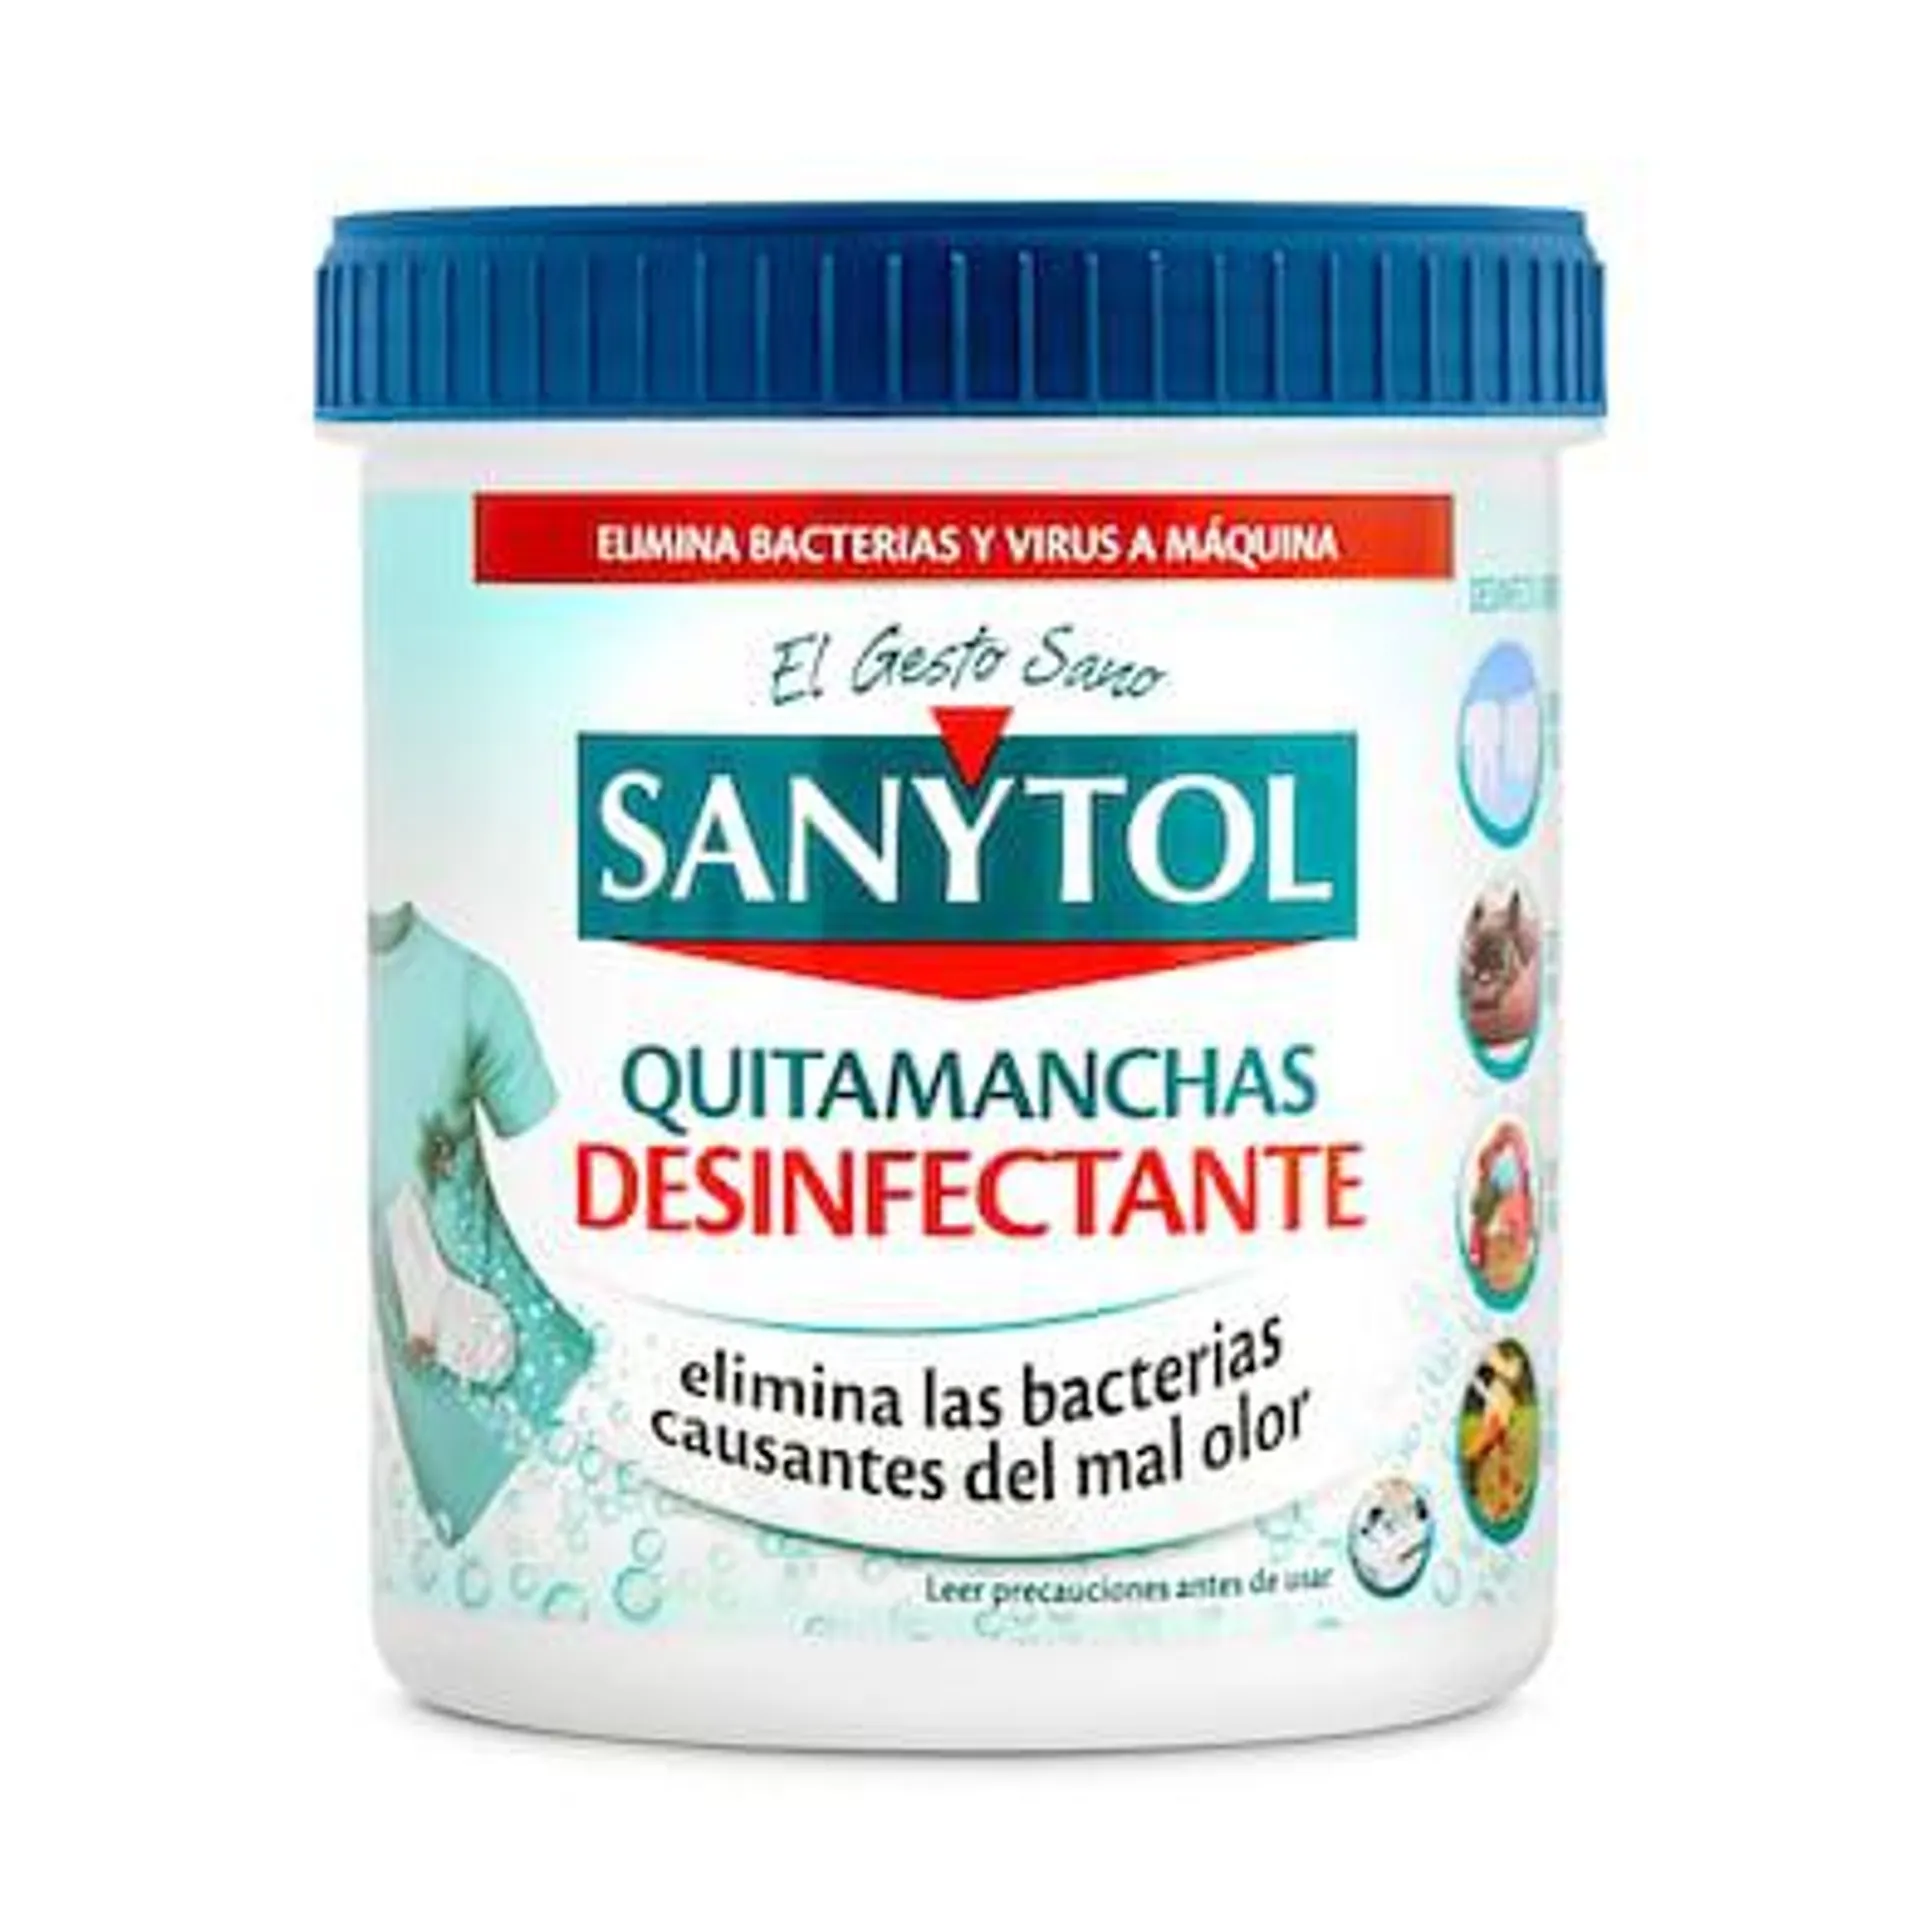 Quitamanchas desinfectante Sanytol bote 450 g